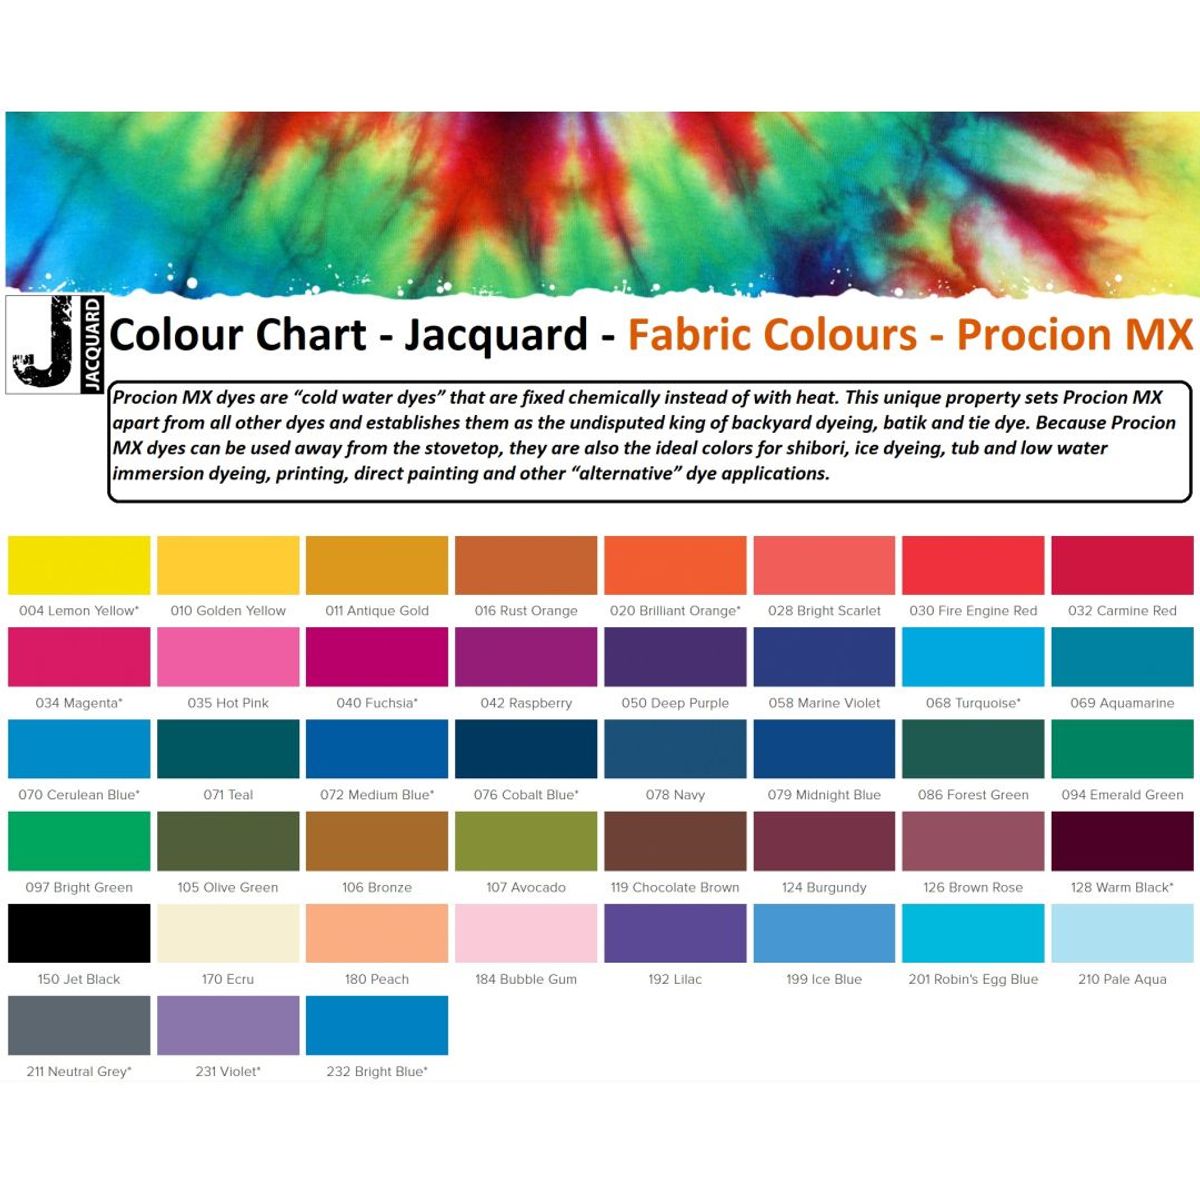 Jacquard - Procion MX Dye - Fabric Textile - Bright Blue 232